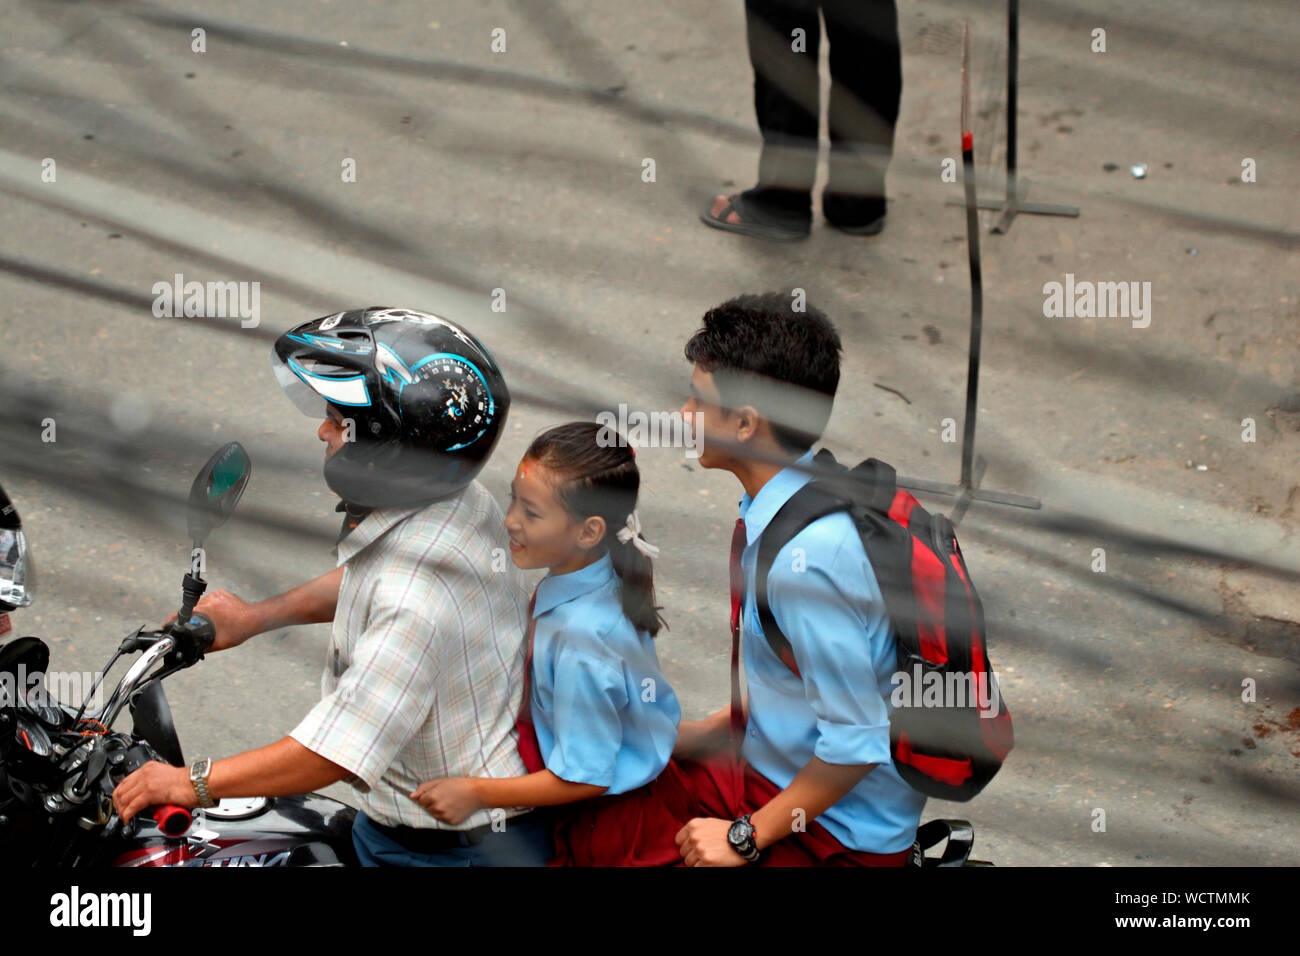 Children riding on a motorbike without any safety gear. Kathmandu, Nepal. 2010. Stock Photo